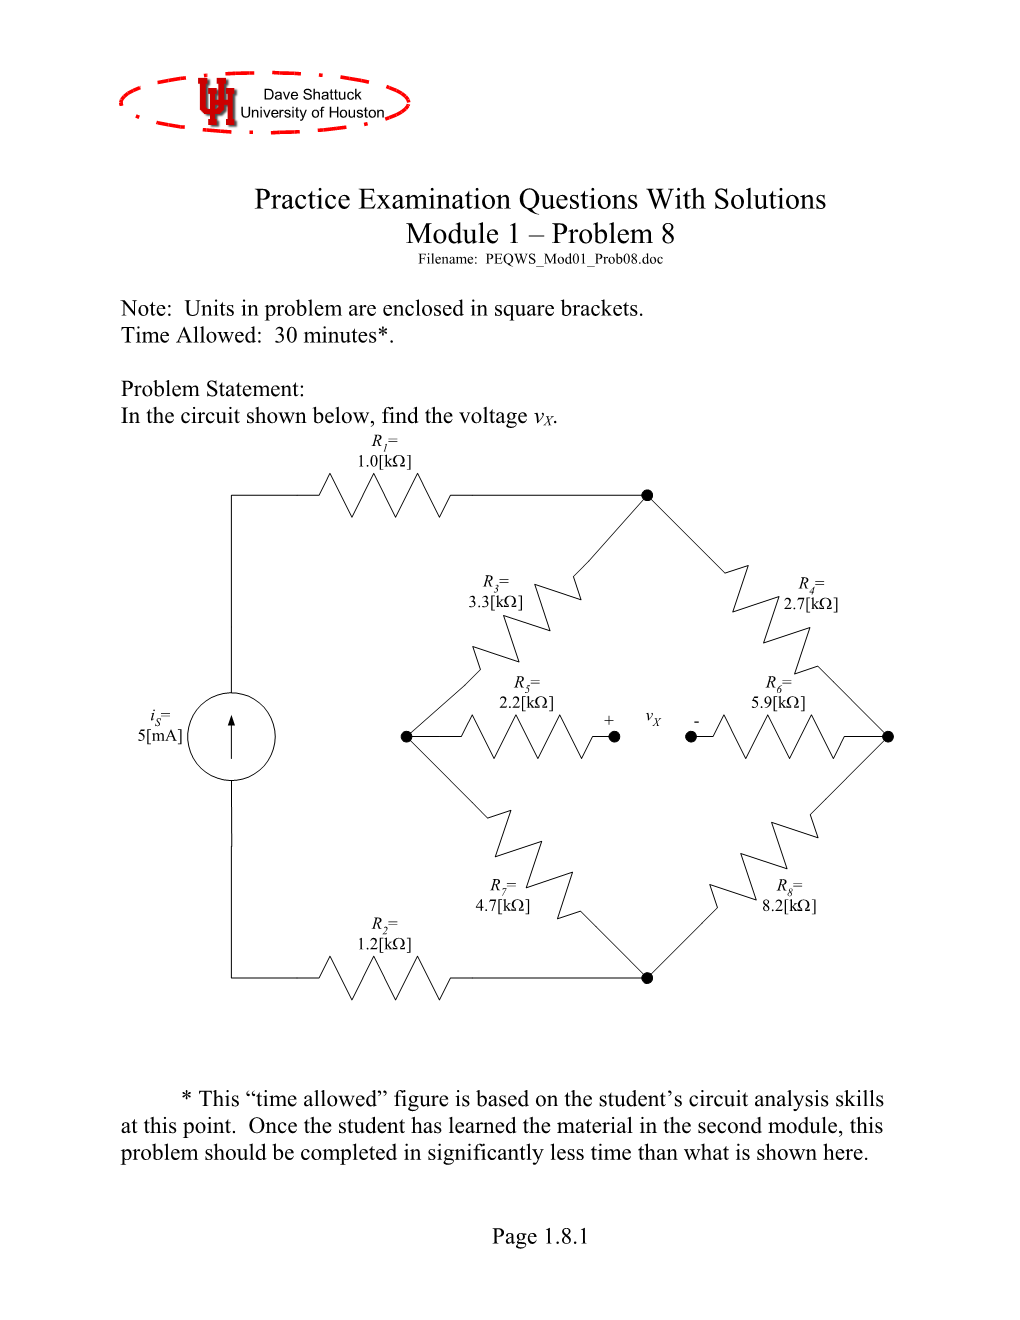 Practice Examination Module 1 Problem 8